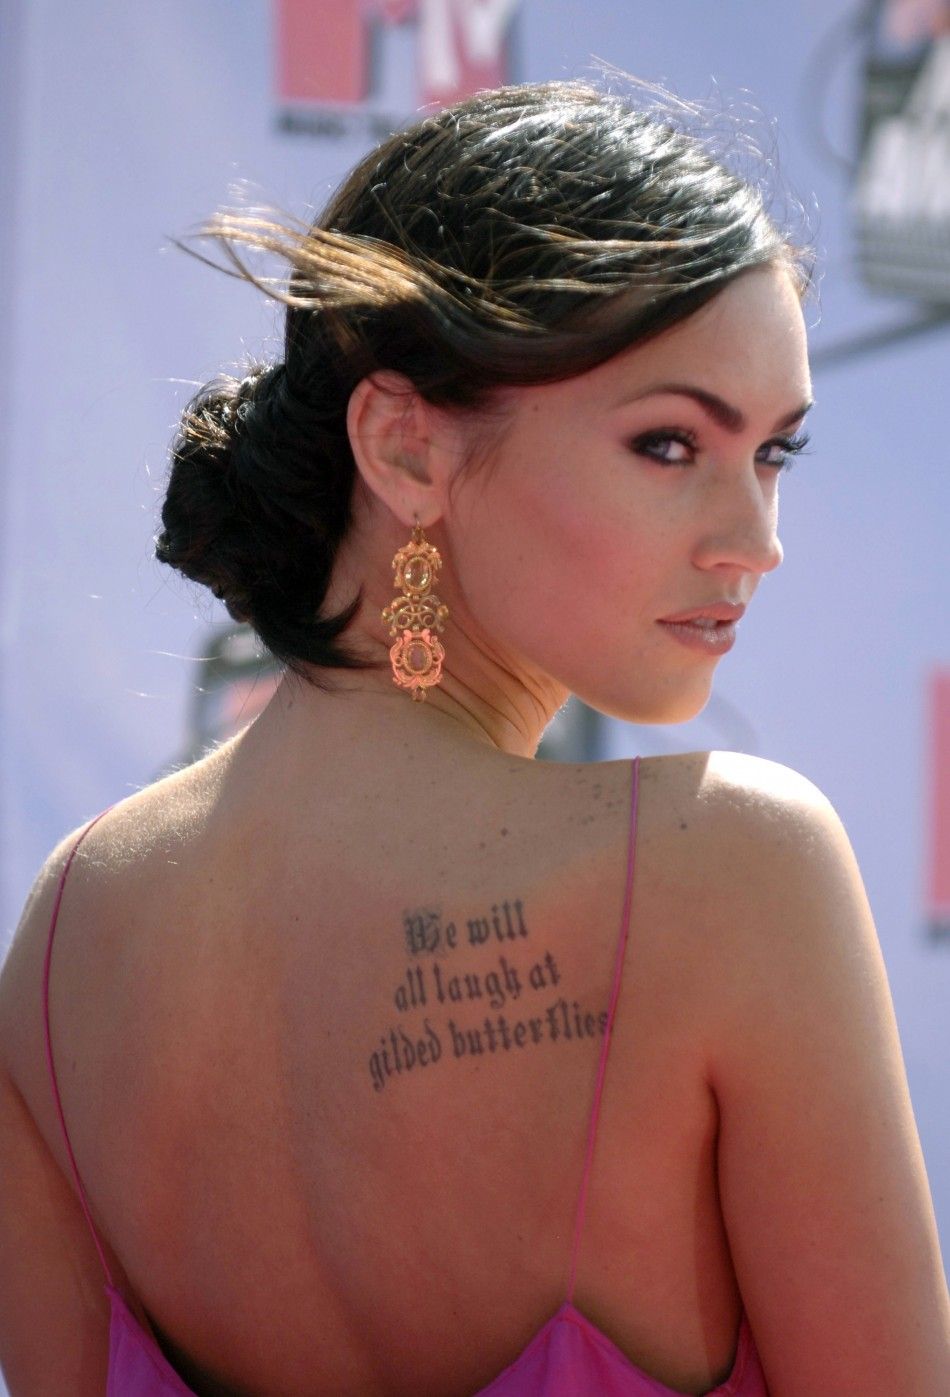 Celebrities Who Have Tattoos Done by Artist Kat Von D